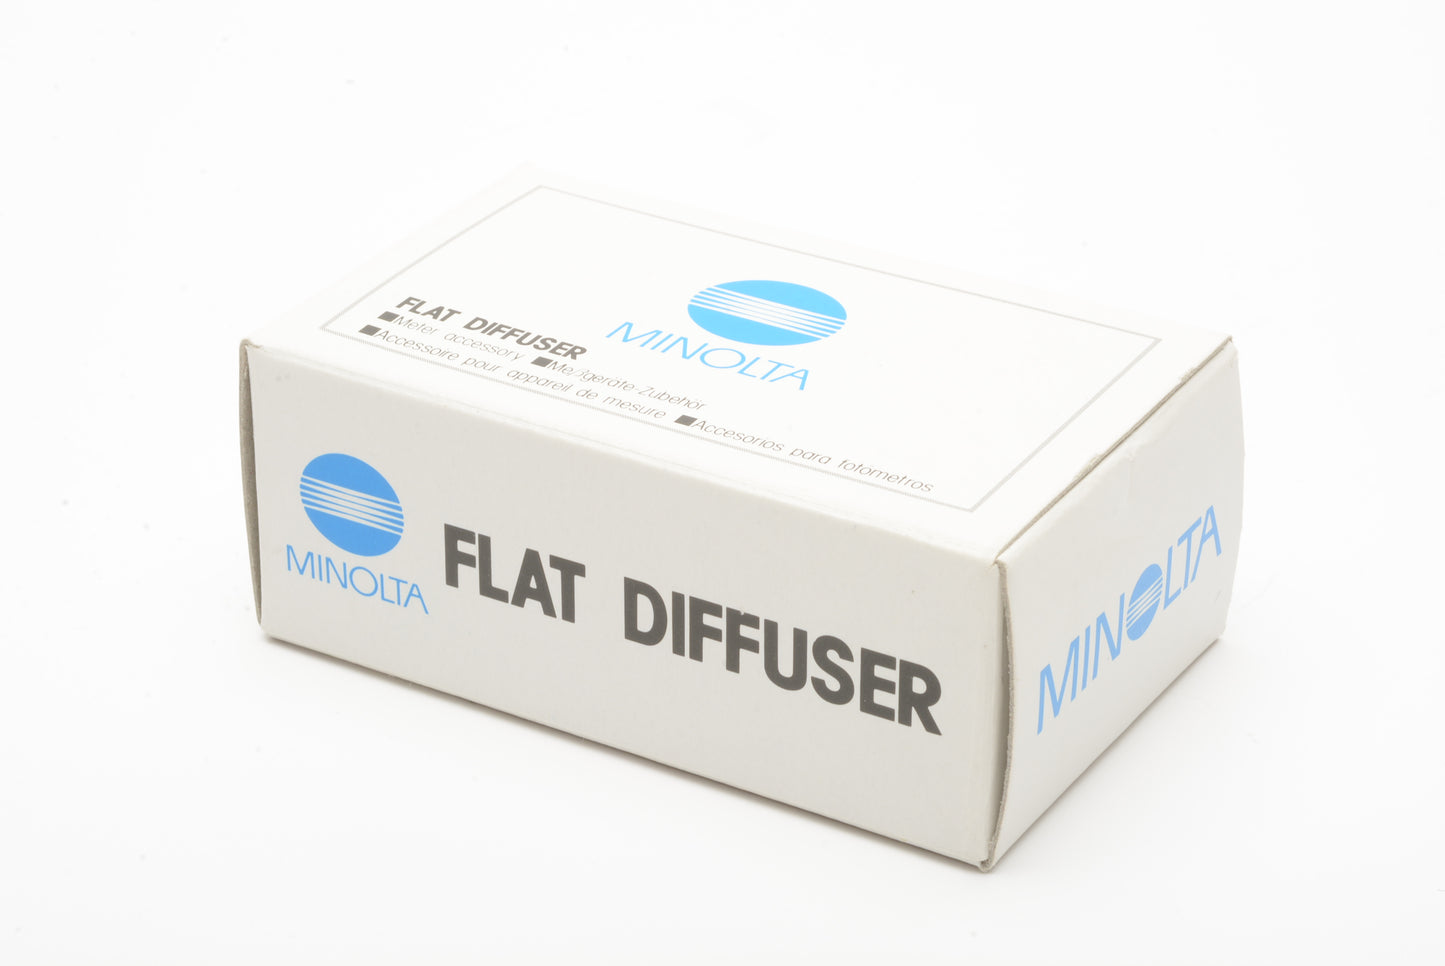 Minolta Flat Diffuser Attachment